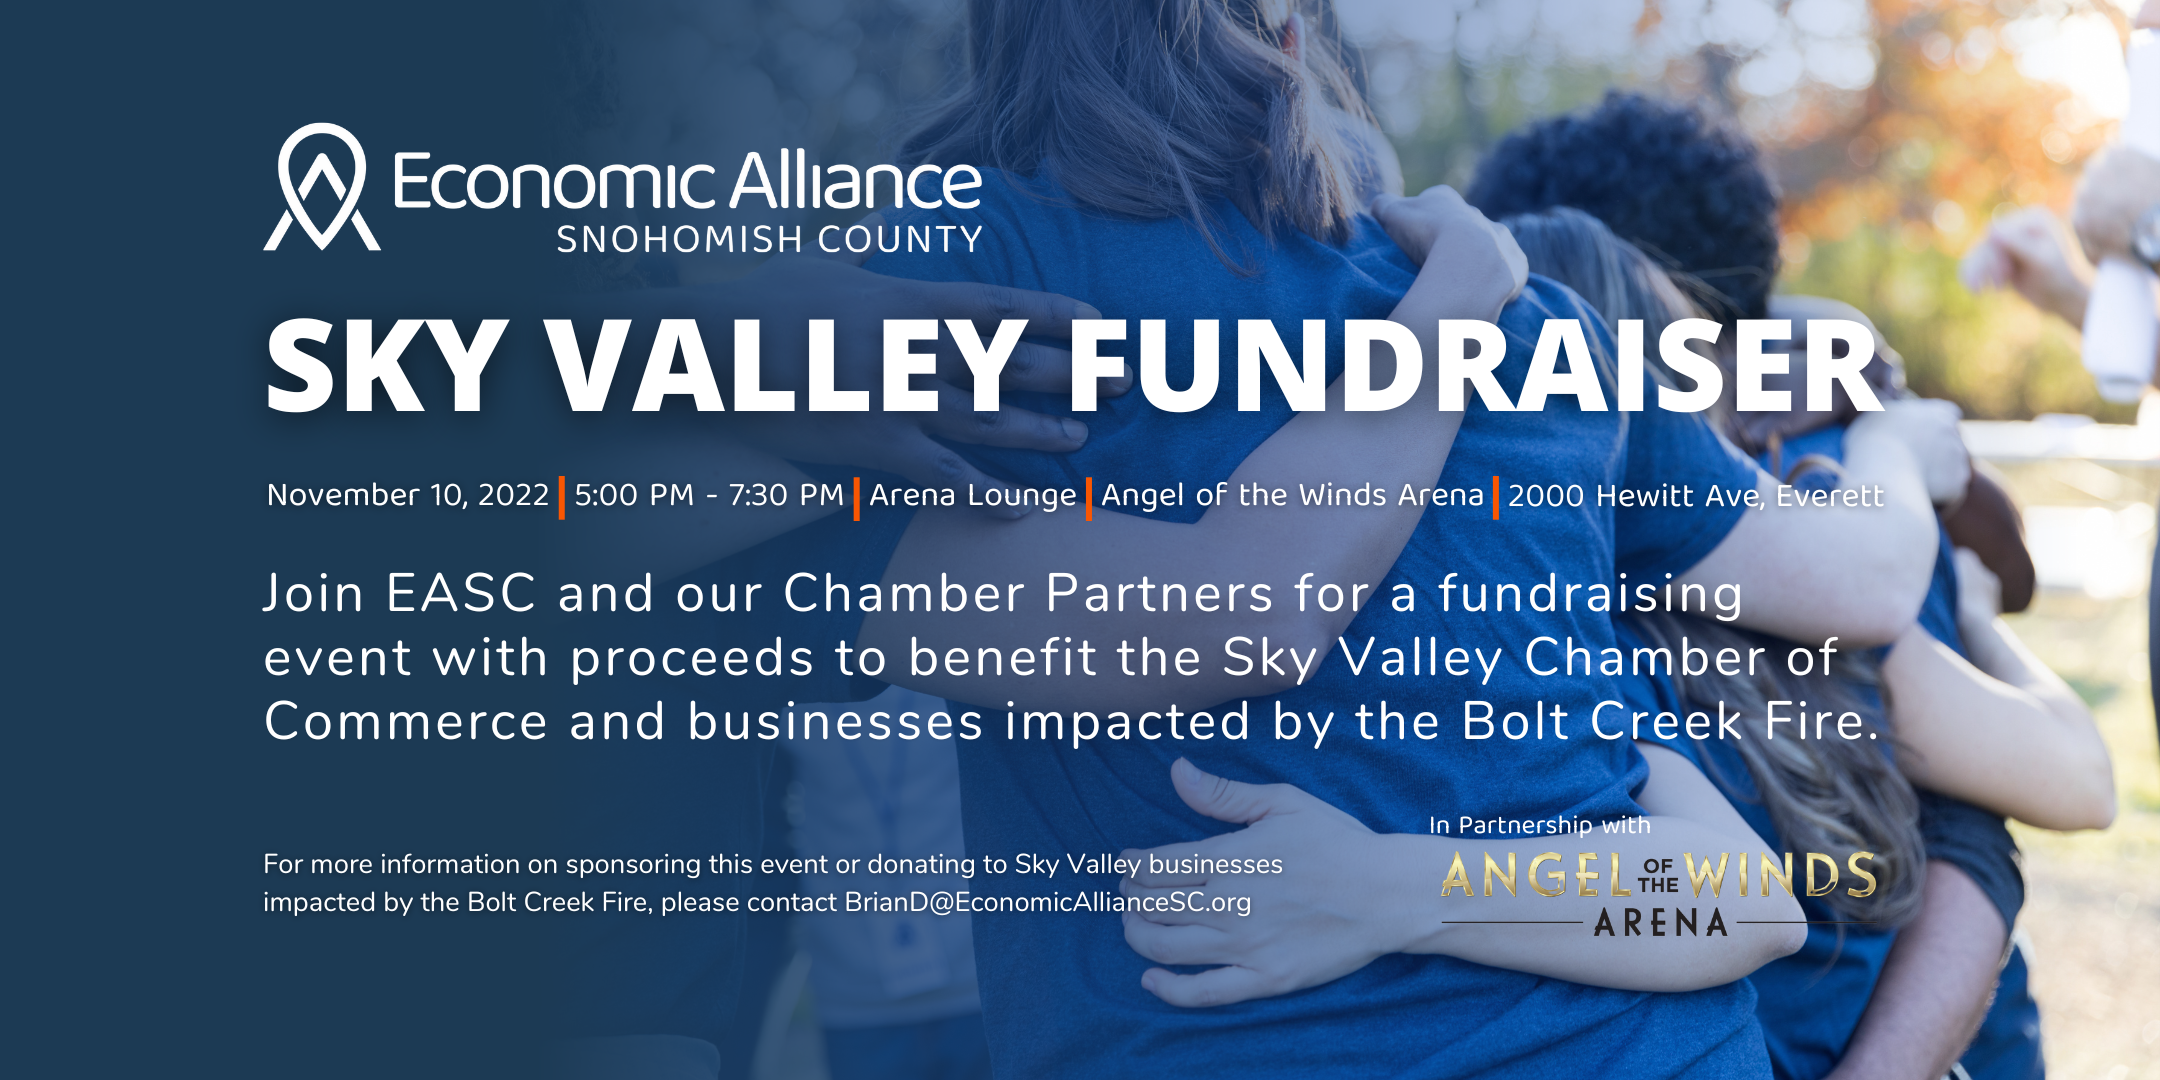 Economic Alliance Snohomish County to Host Sky Valley Fundraiser on November 10 Main Photo